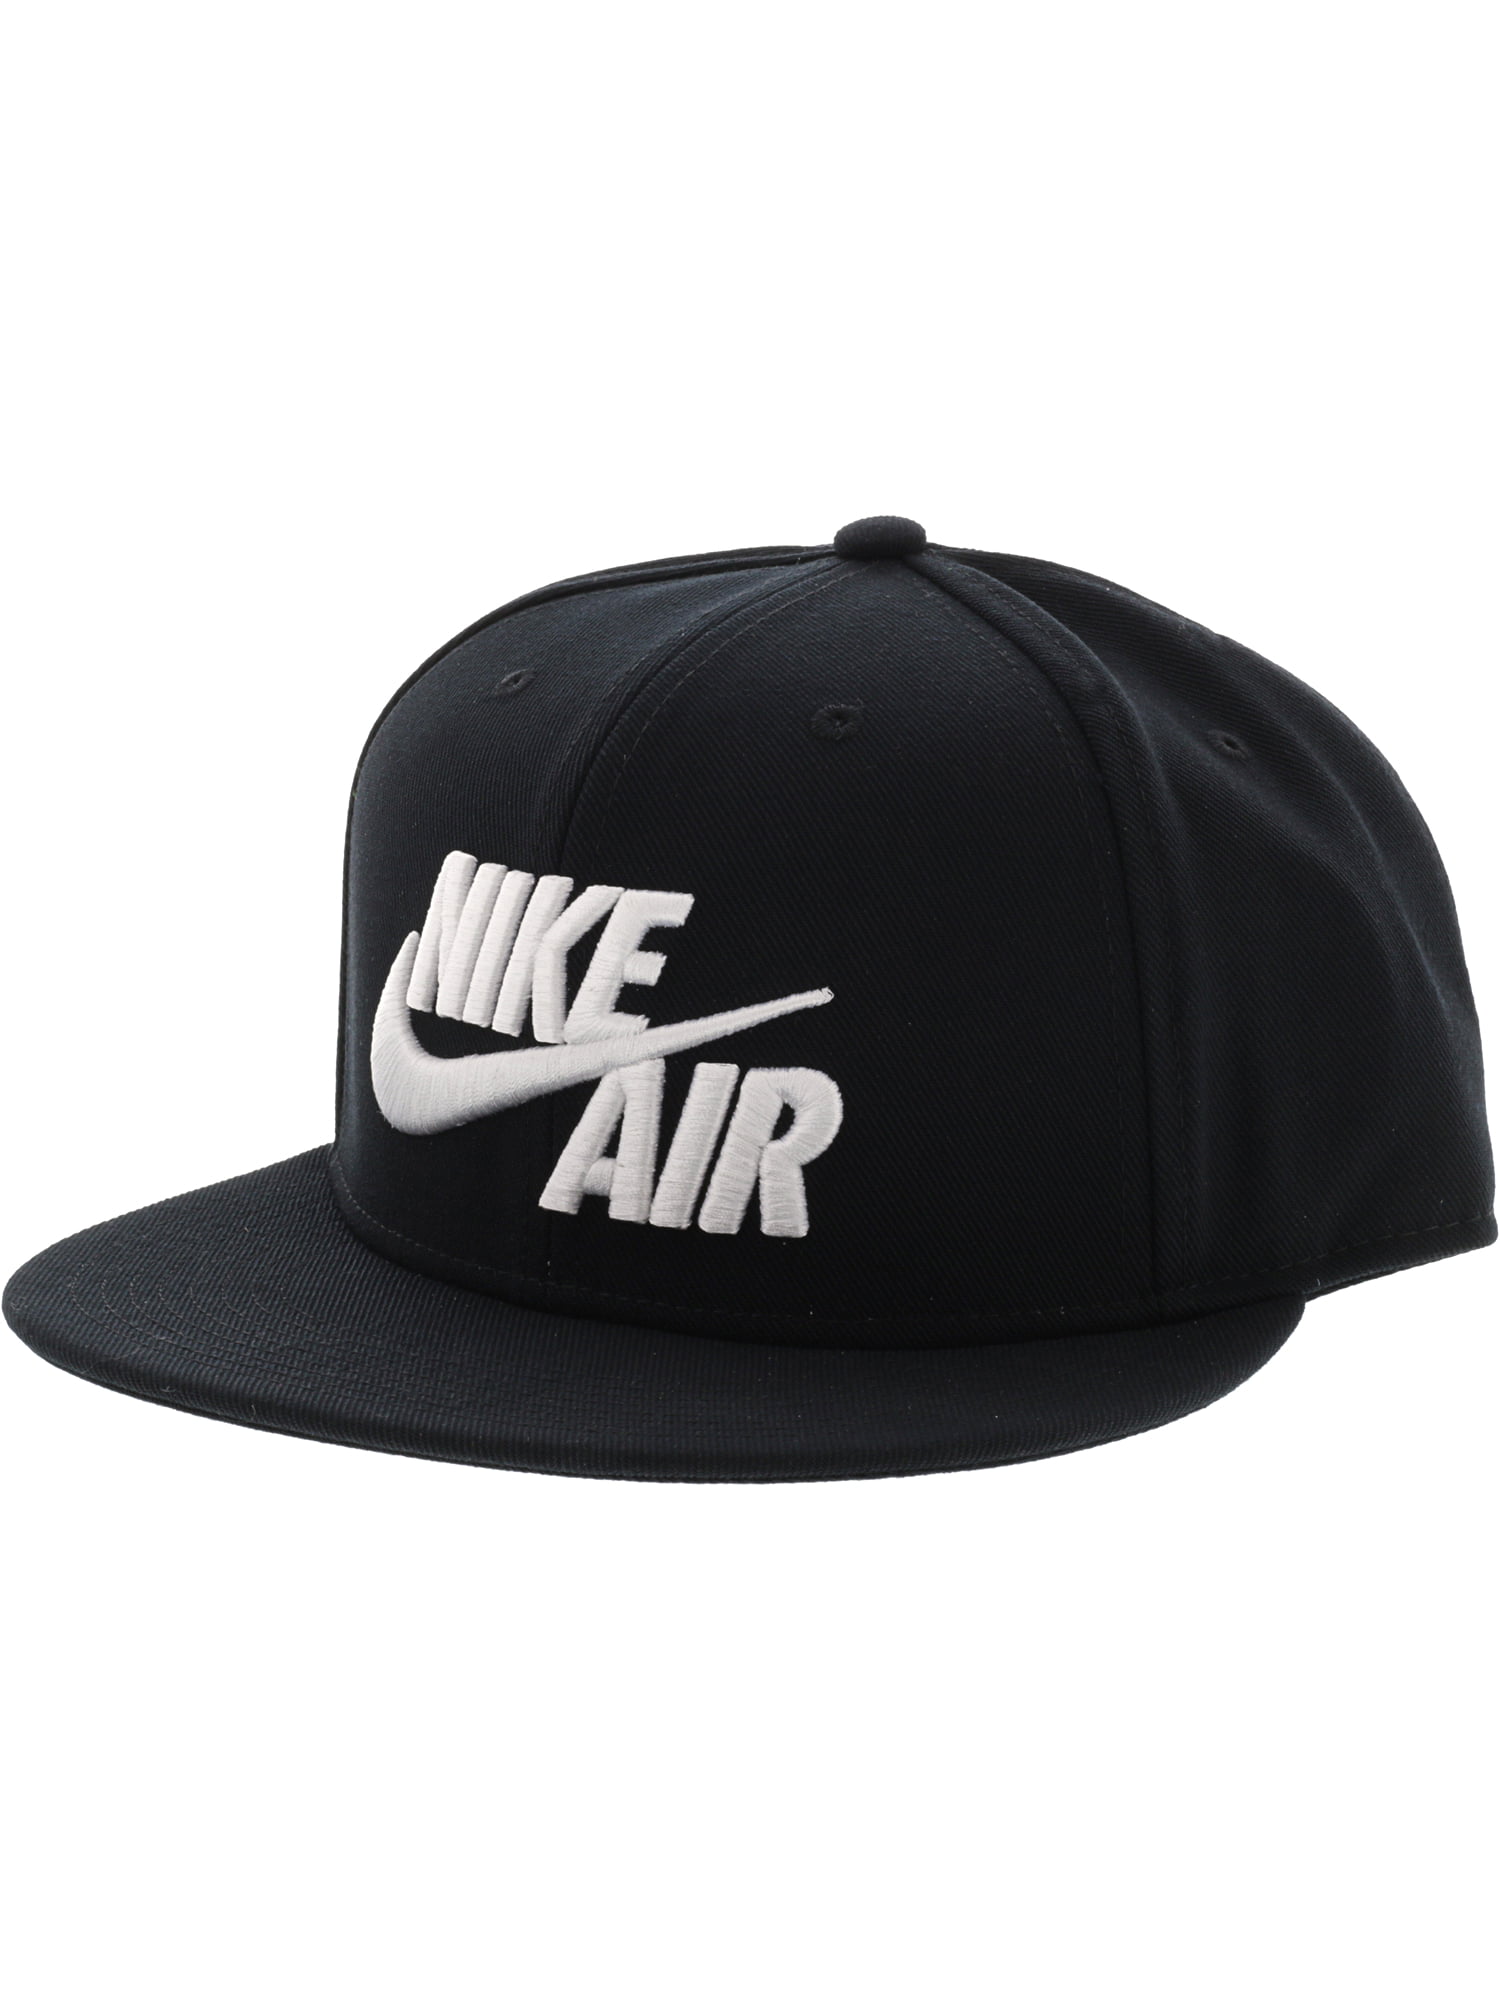 nike air true snapback hat